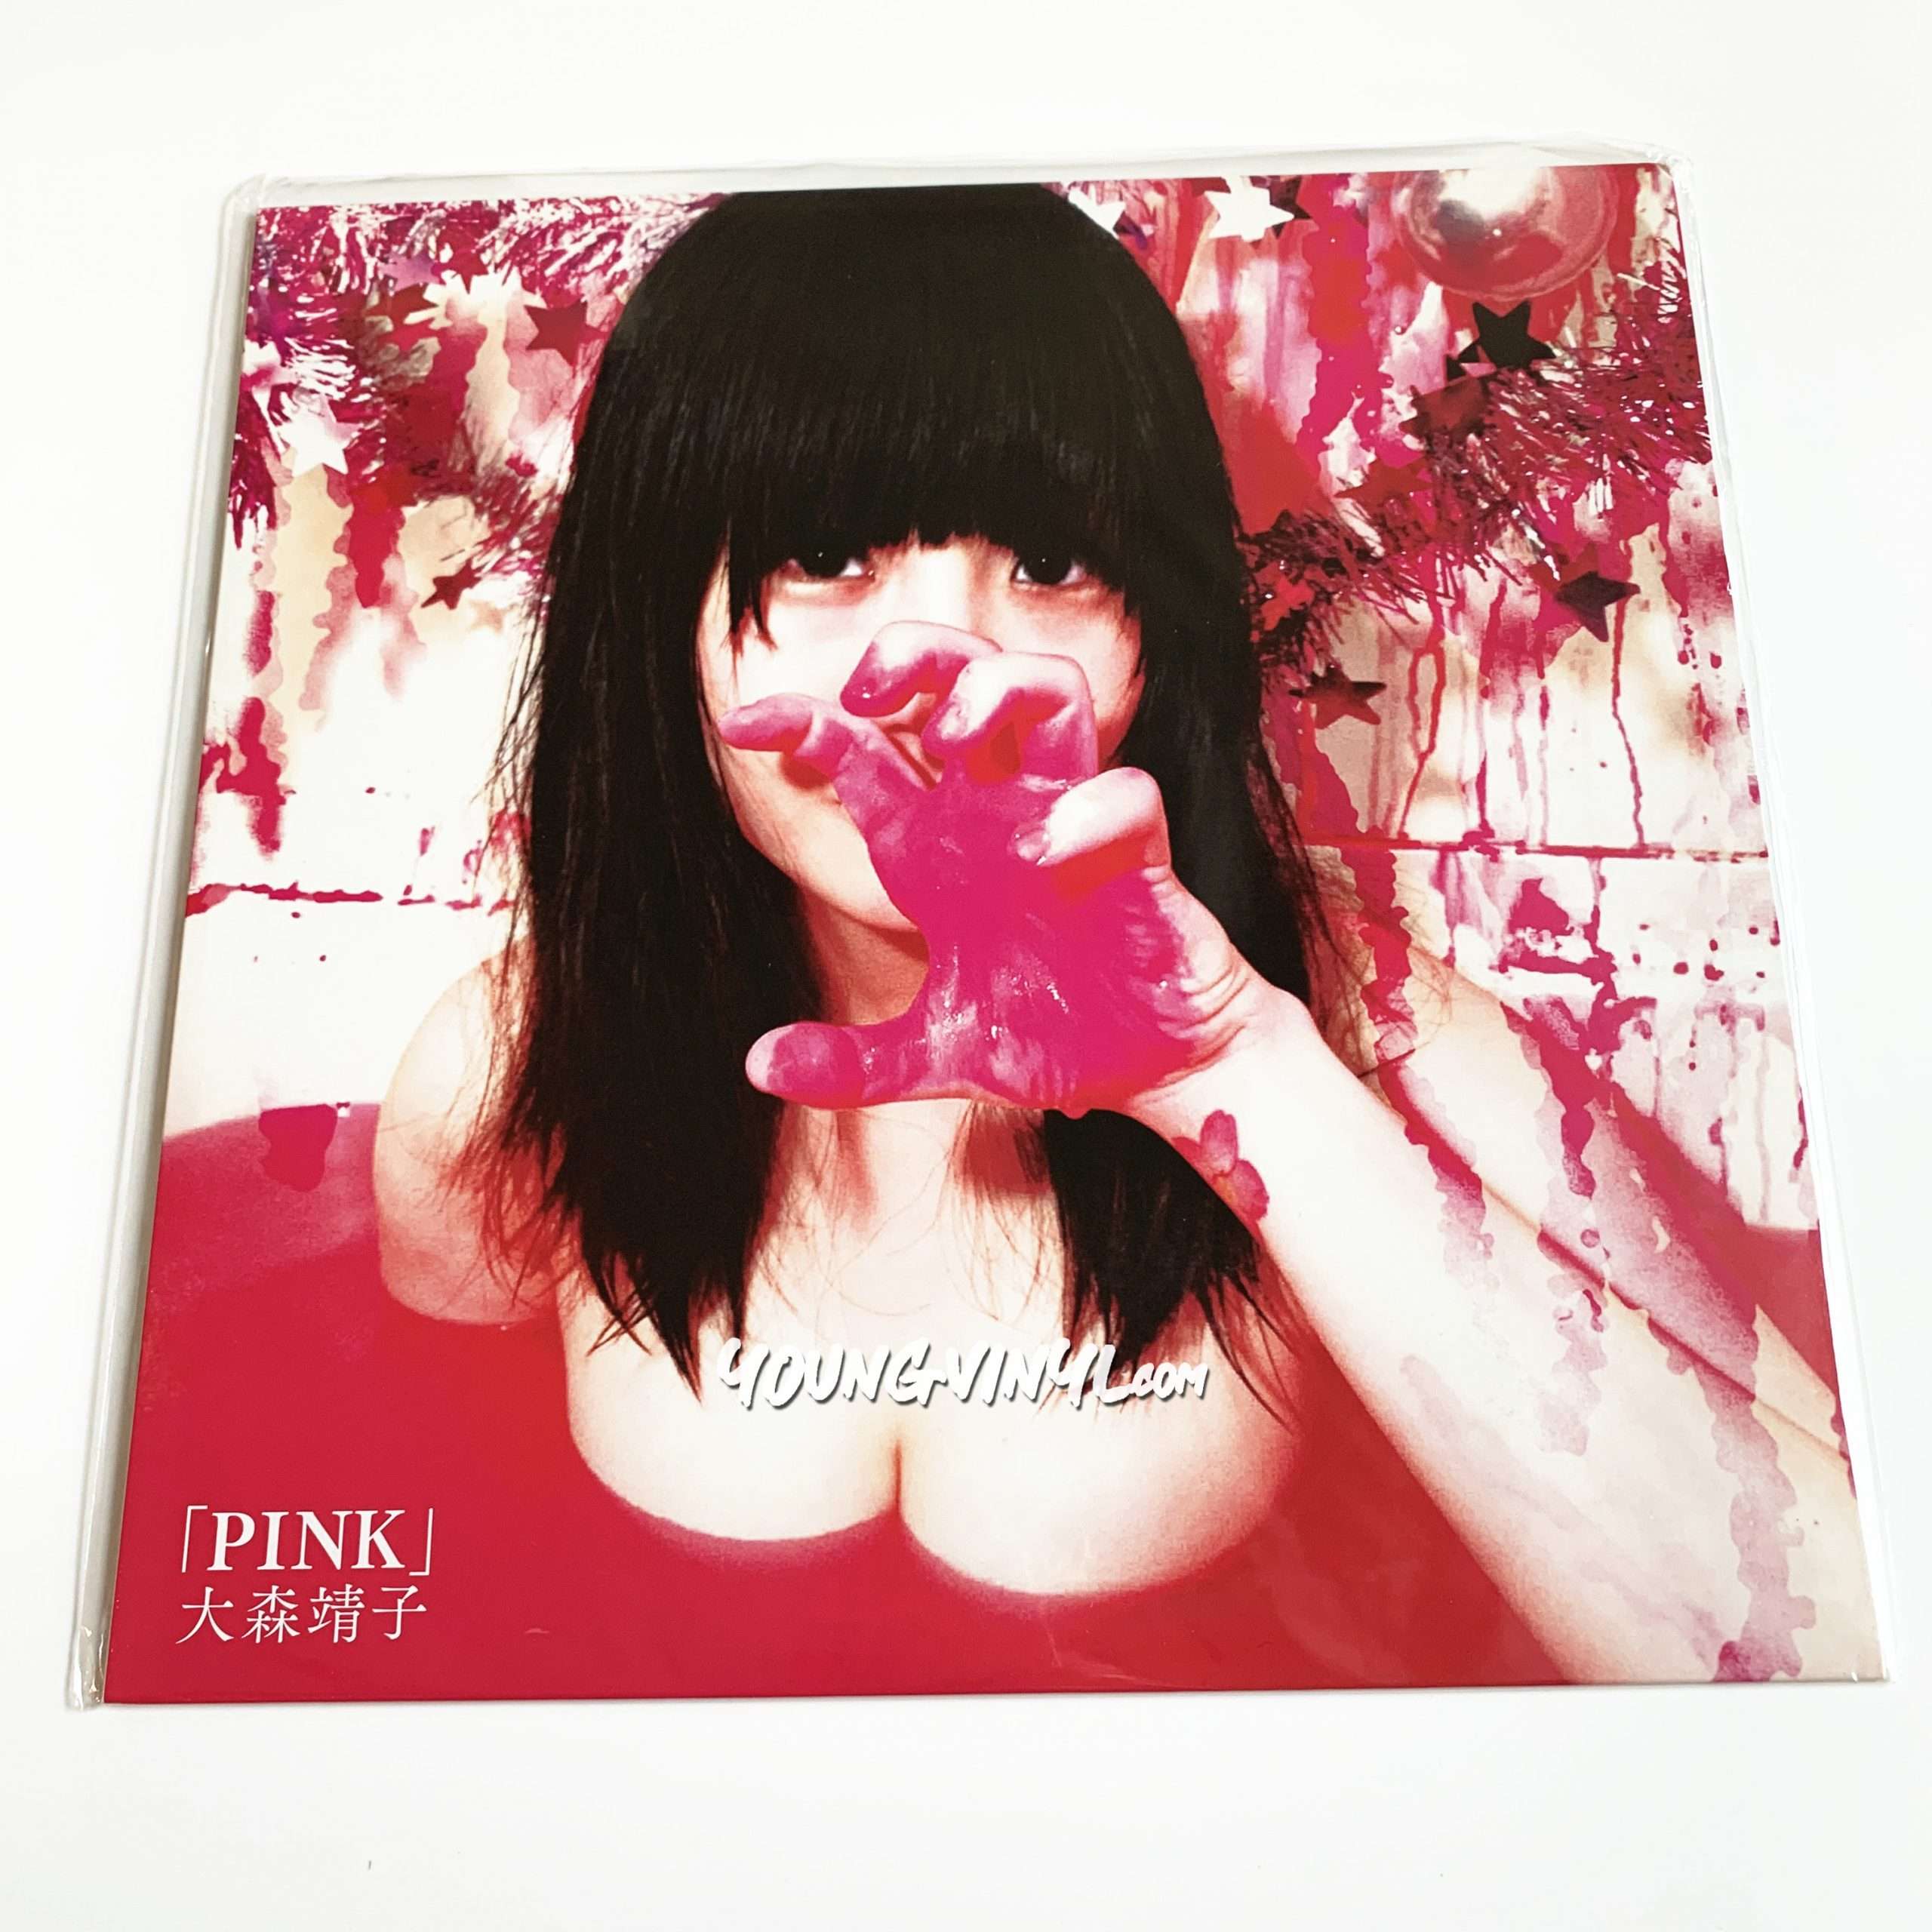 Seiko Oomori Pink Vinyl 大森靖子 - Young Vinyl